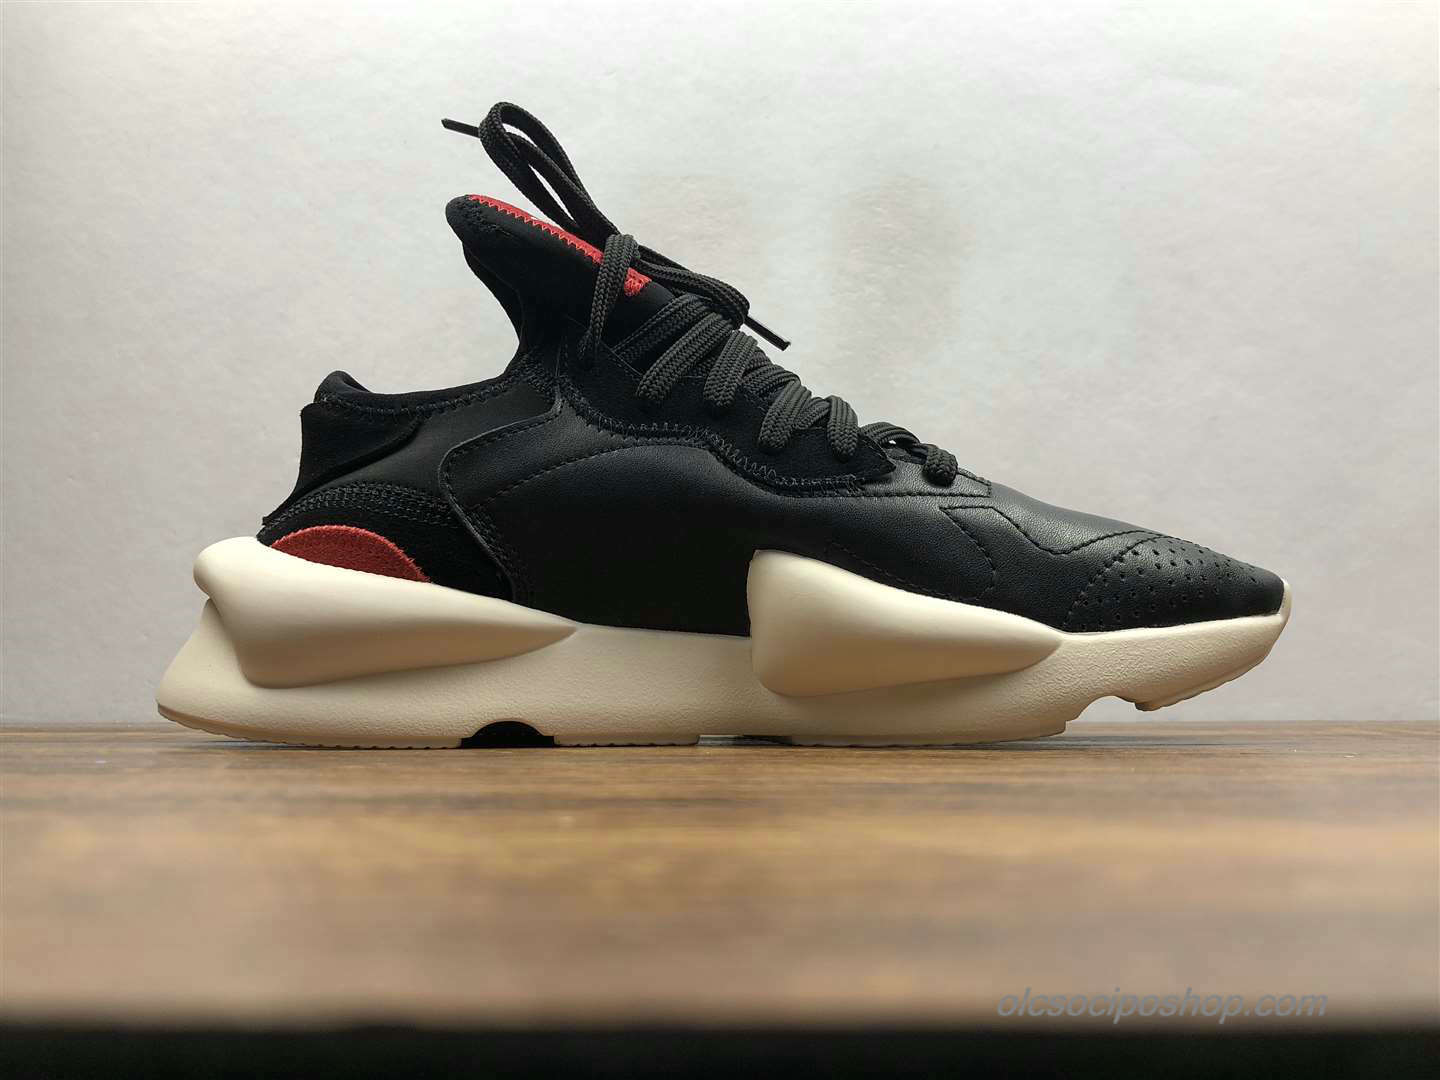 Yohji Yamamoto x Adidas Y-3 Kaiwa Chunky Fekete/Piszkosfehér/Piros Cipők (A8860)